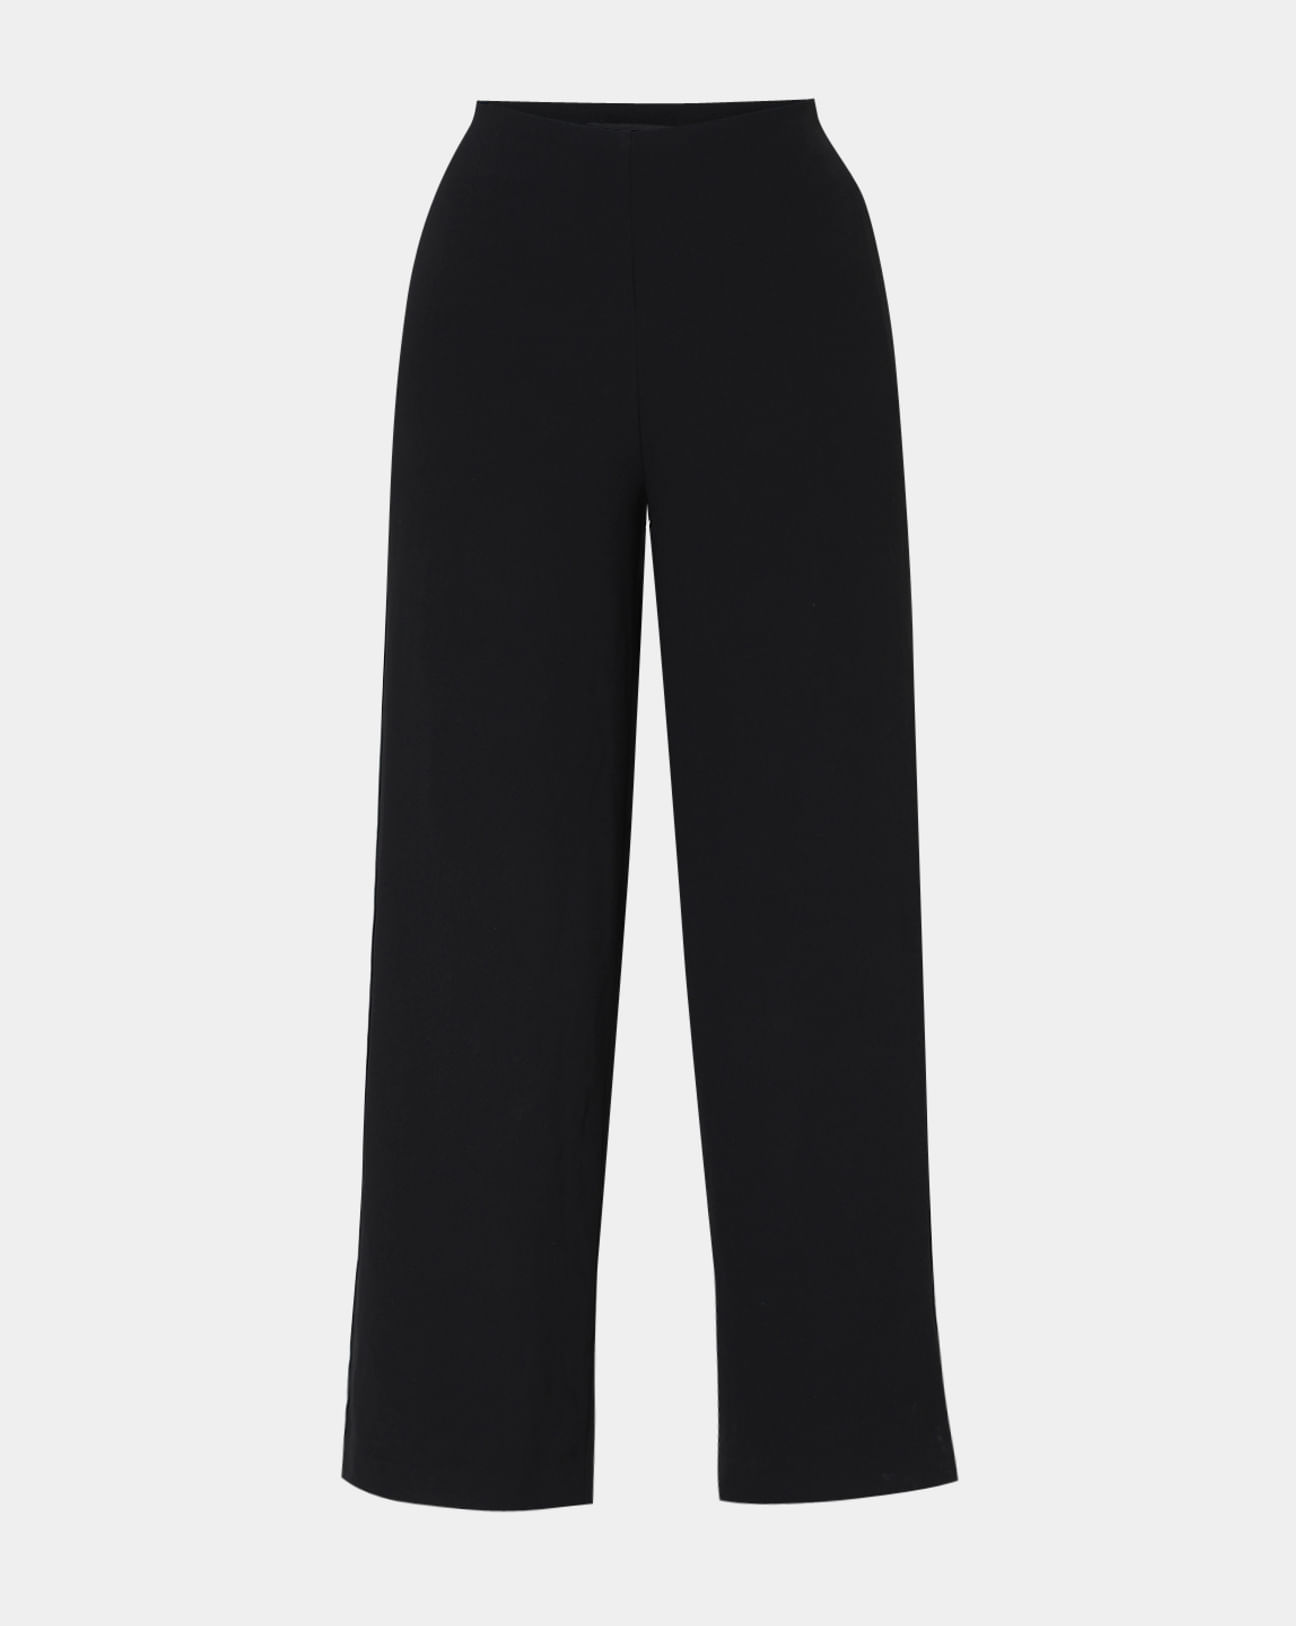 Buy Black Flared Pants Online In India.